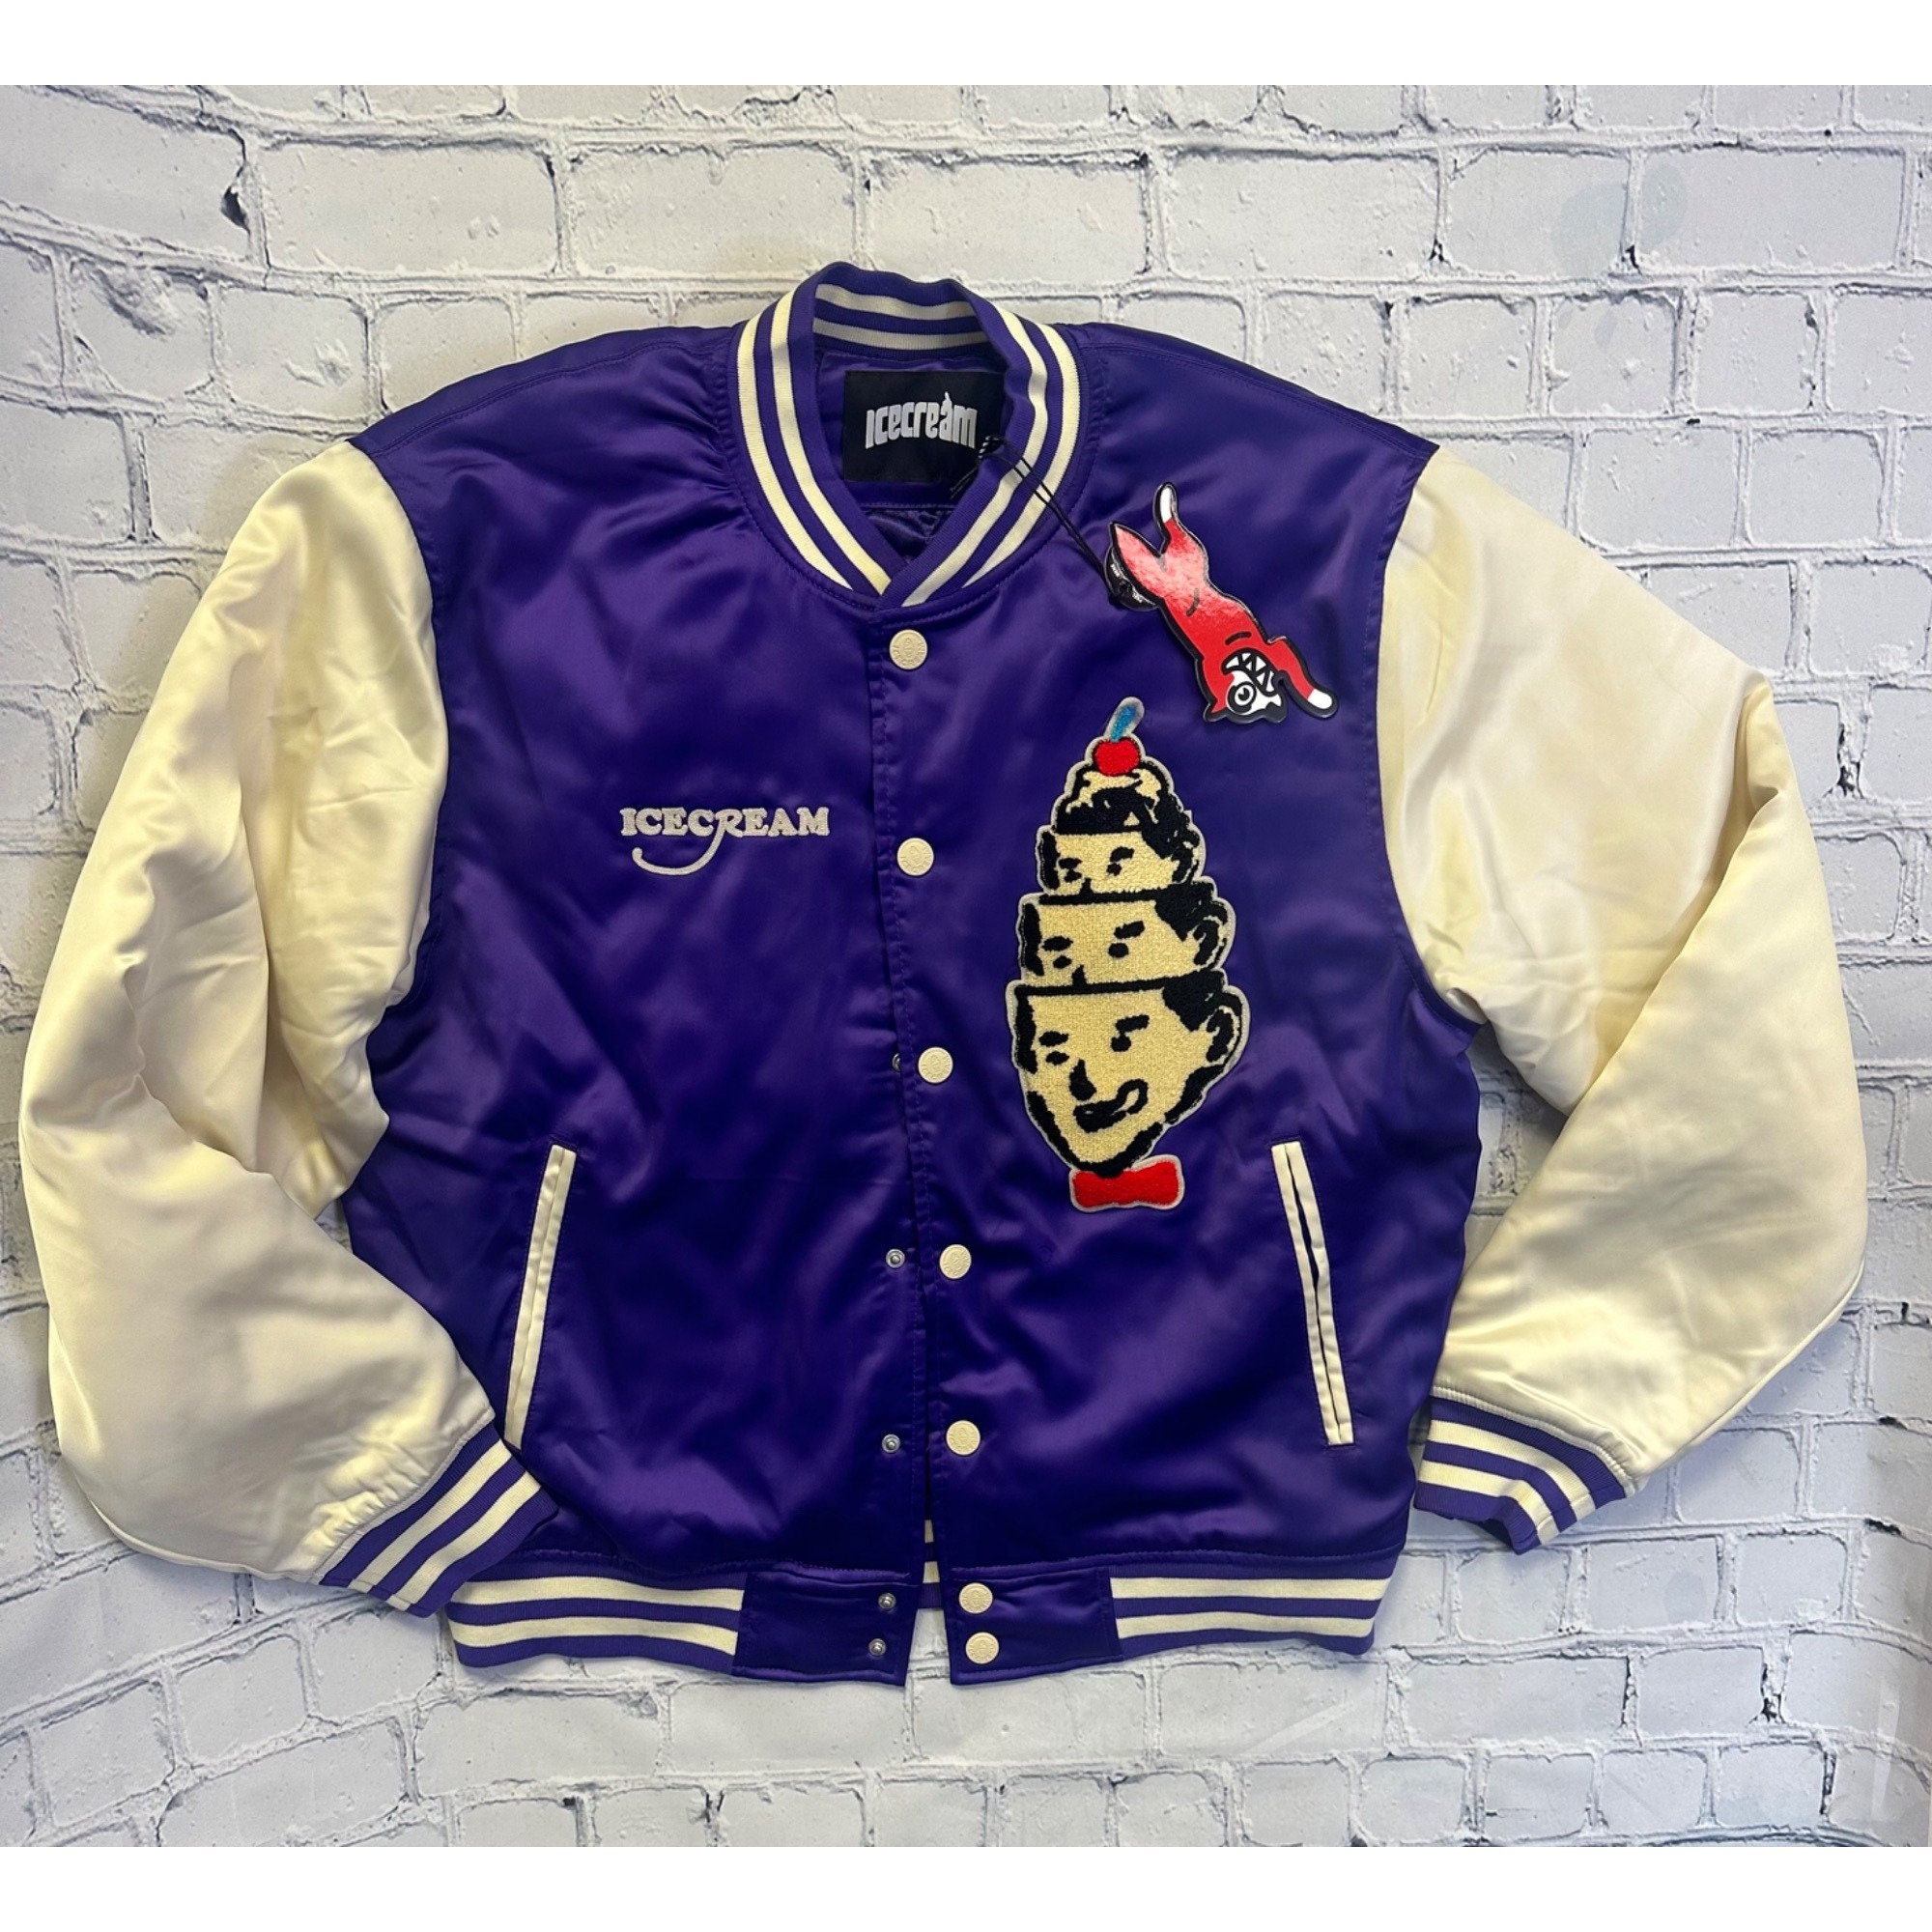  Men's Vintage Donovan Mitchell HBCU 90S Nba Basketball  Letterman Woolen Jacket : Clothing, Shoes & Jewelry